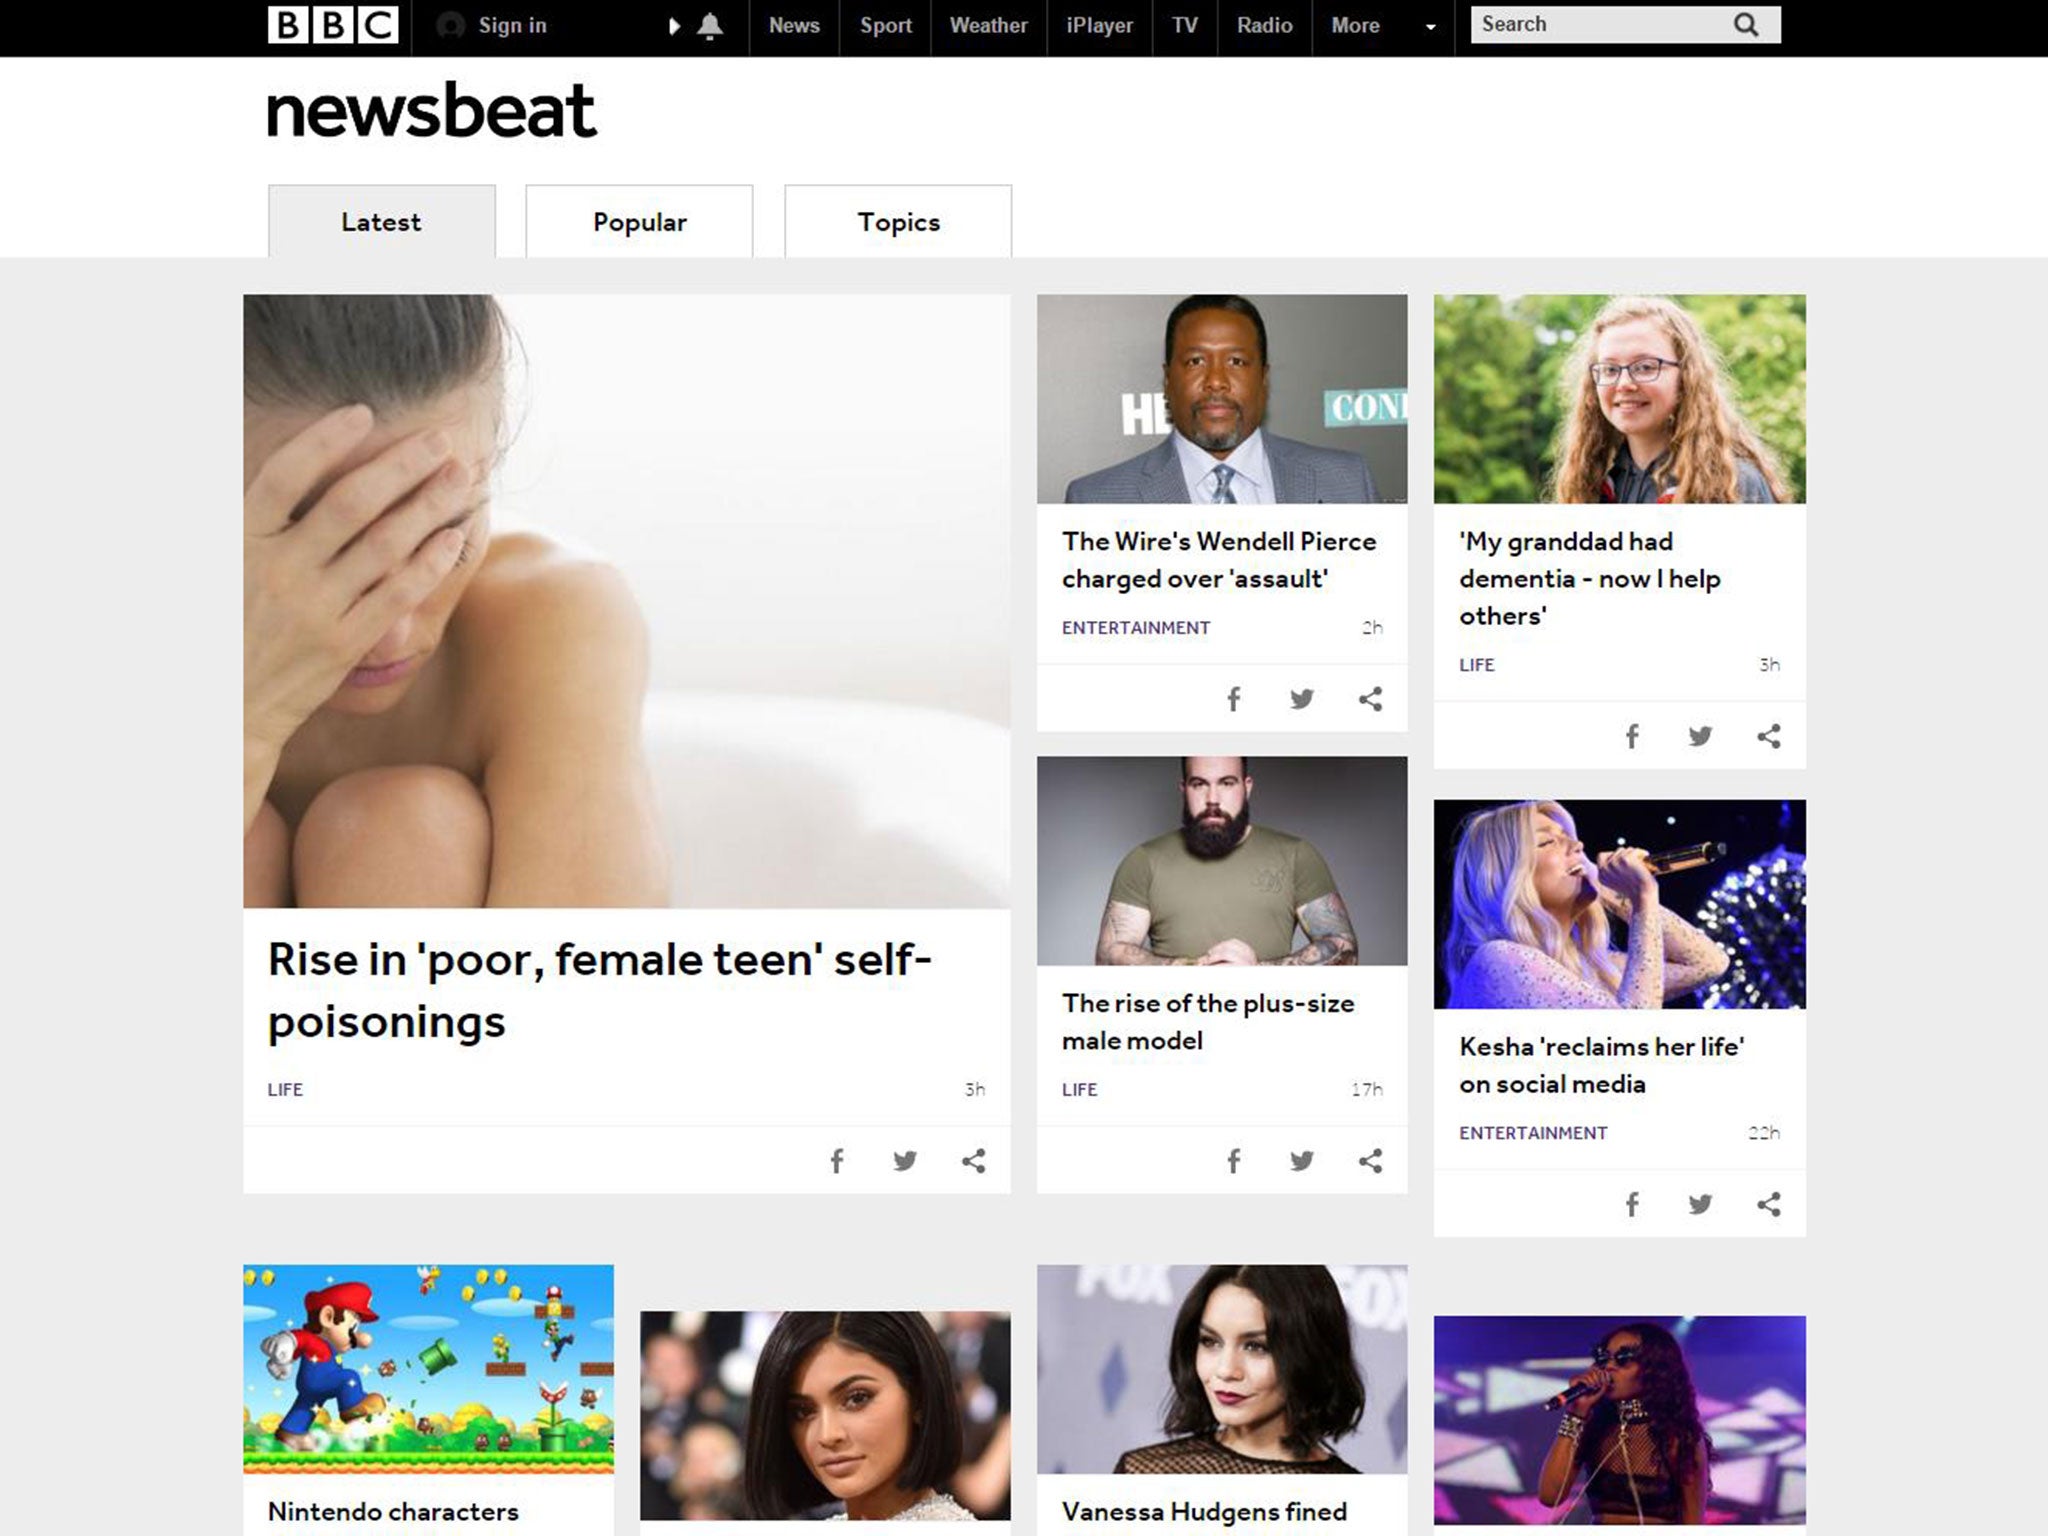 The BBC Newsbeat website